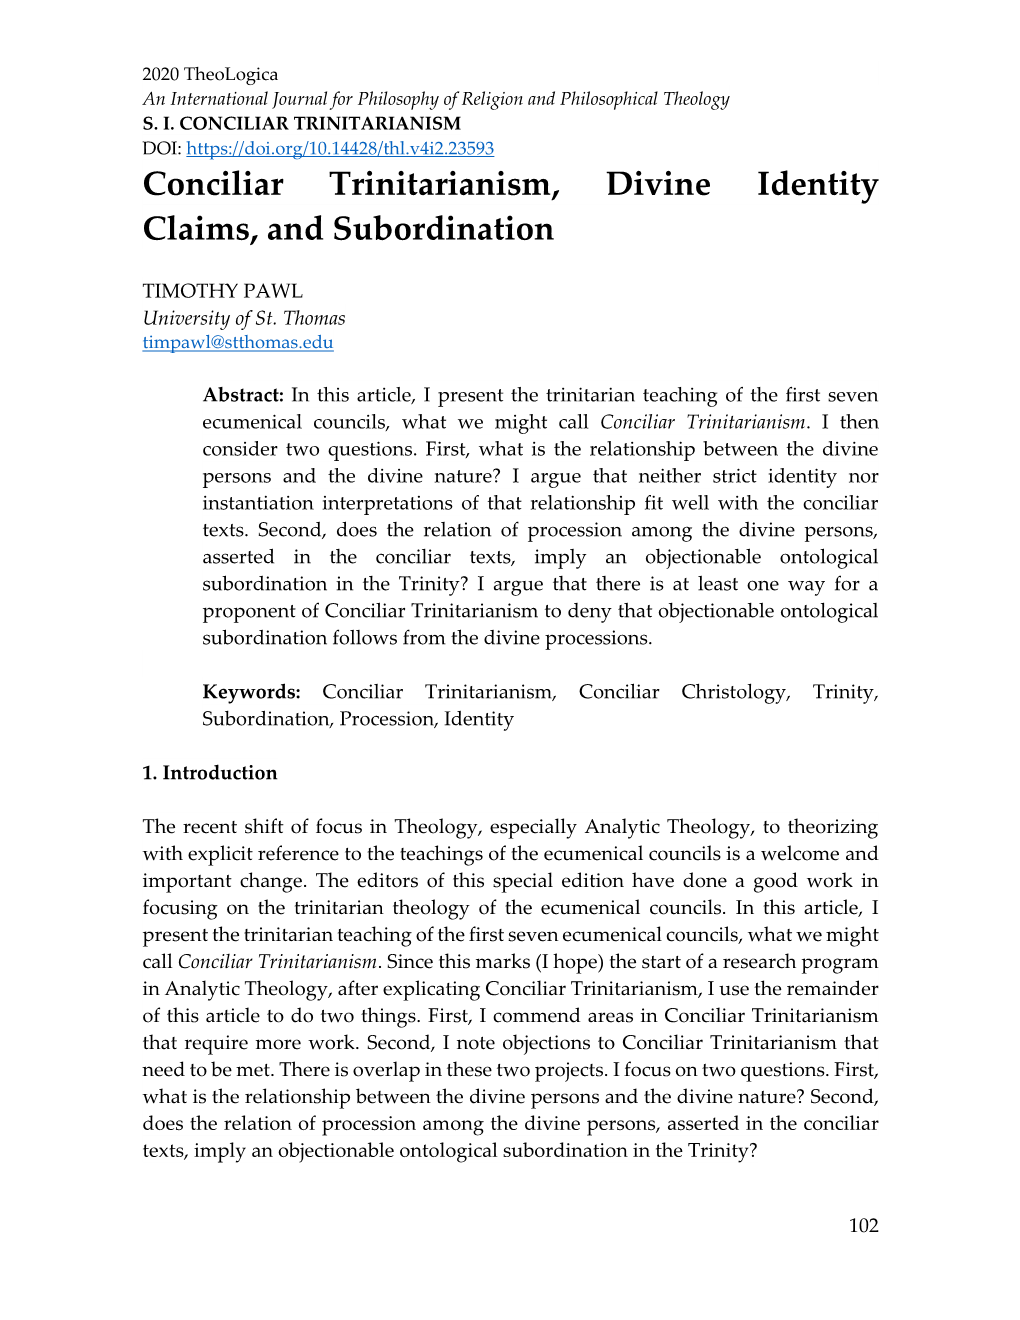 Conciliar Trinitarianism, Divine Identity Claims, and Subordination